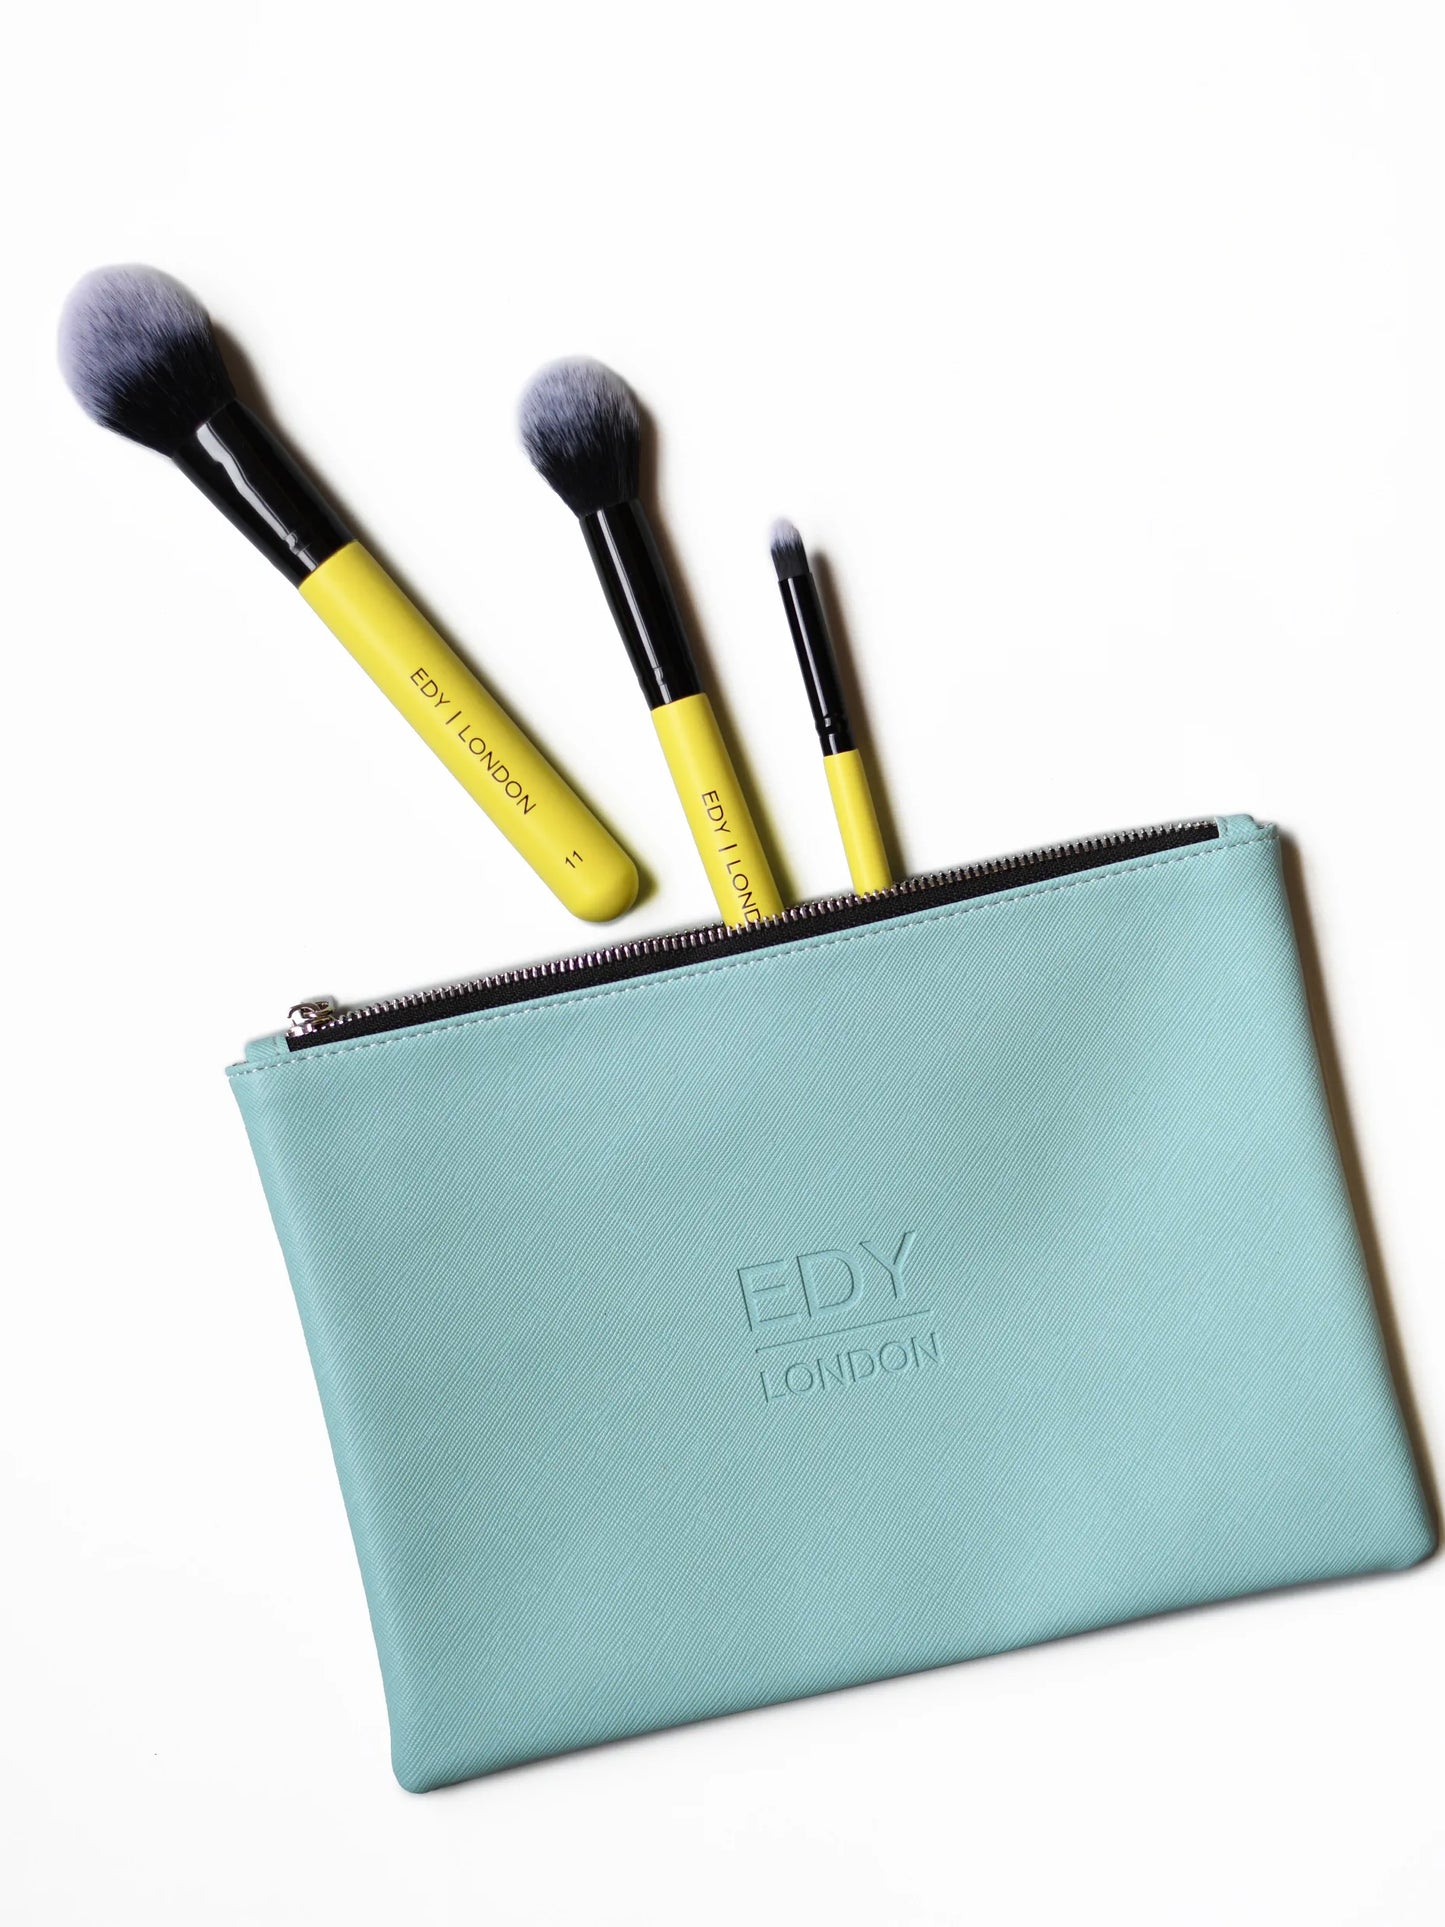 Makeup Brush Bag & Cosmetic Purse Make-up bag EDY LONDON    - EDY LONDON PRODUCTS UK - The Best Makeup Brushes - shop.edy.london